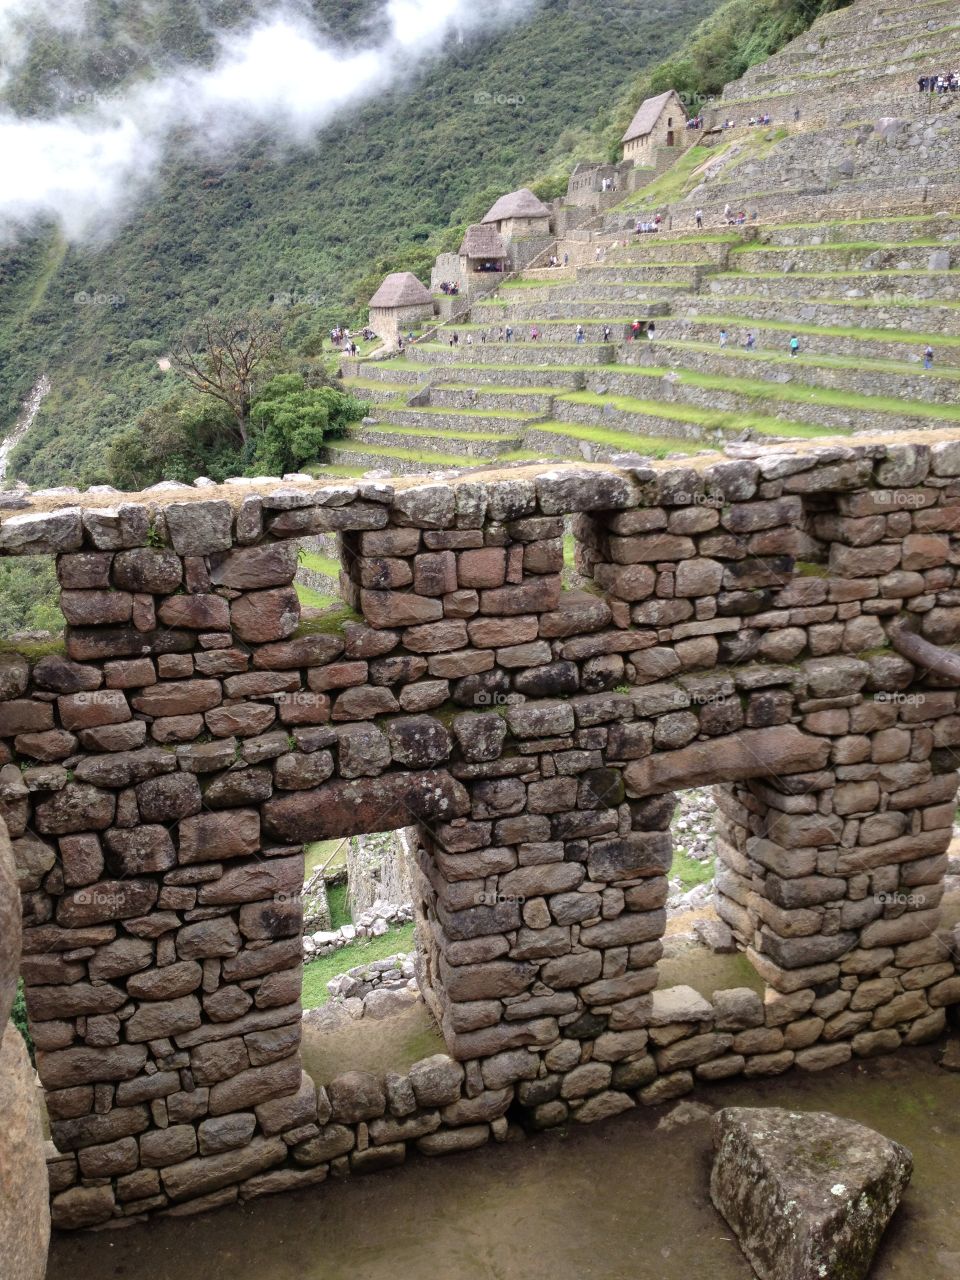 Inca 